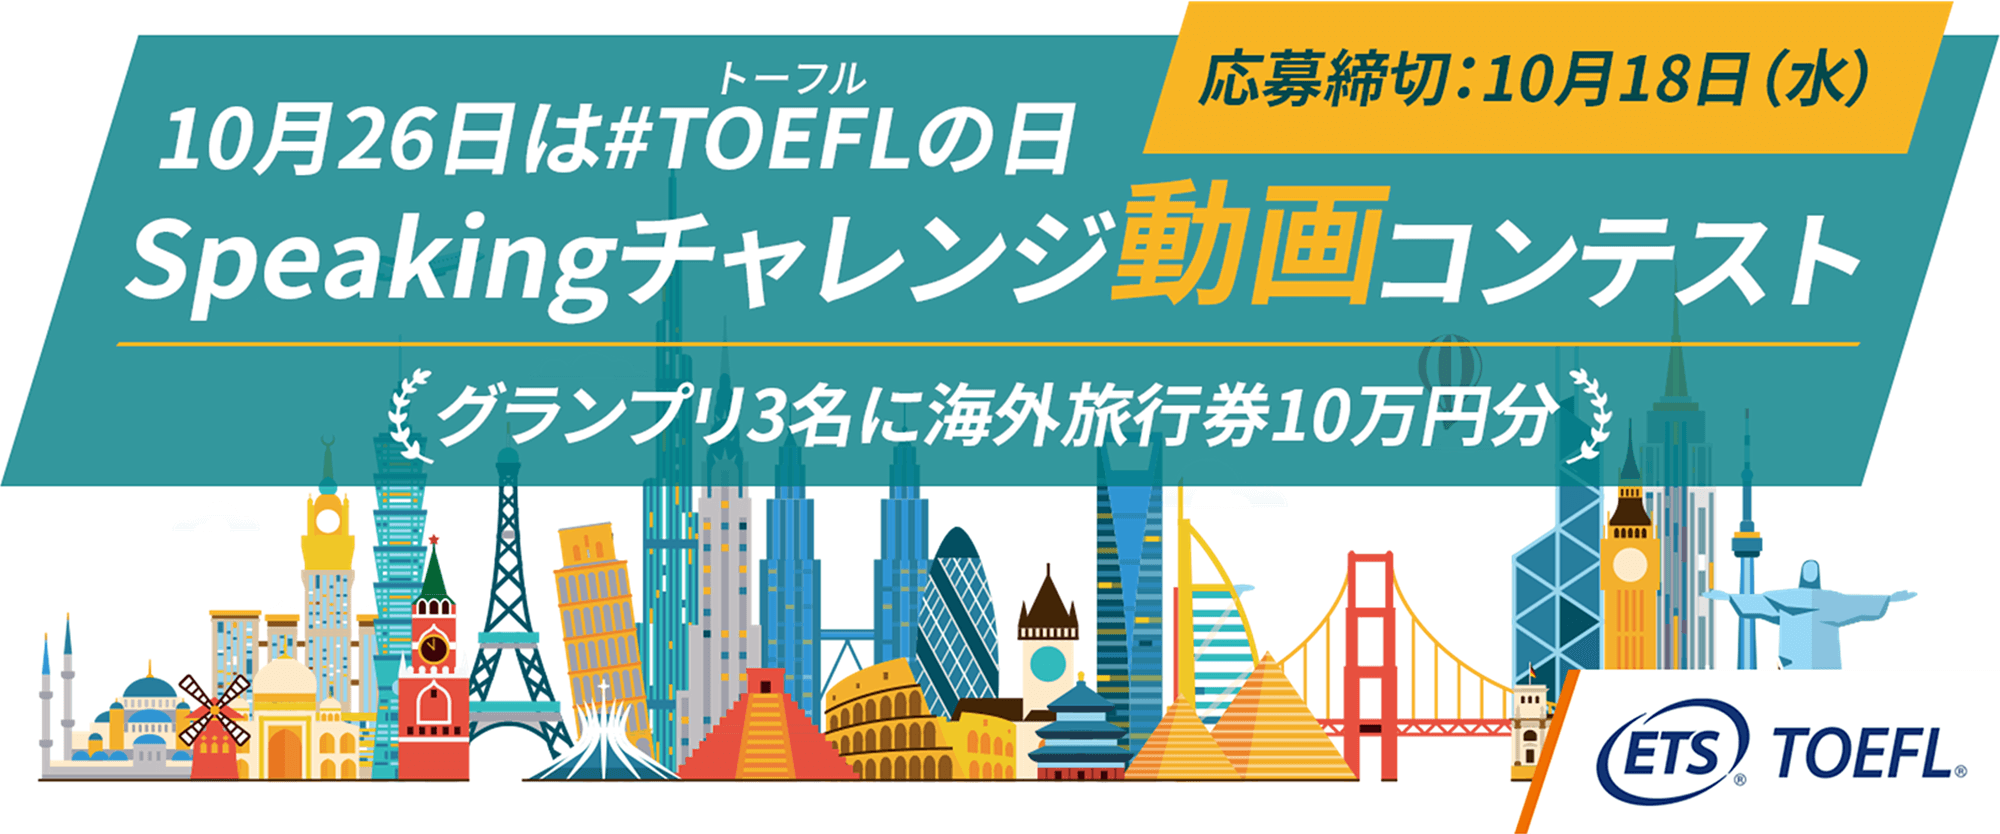 TOEFLの日制定記念 Speakingチャレンジ動画コンテスト参加者募集中！